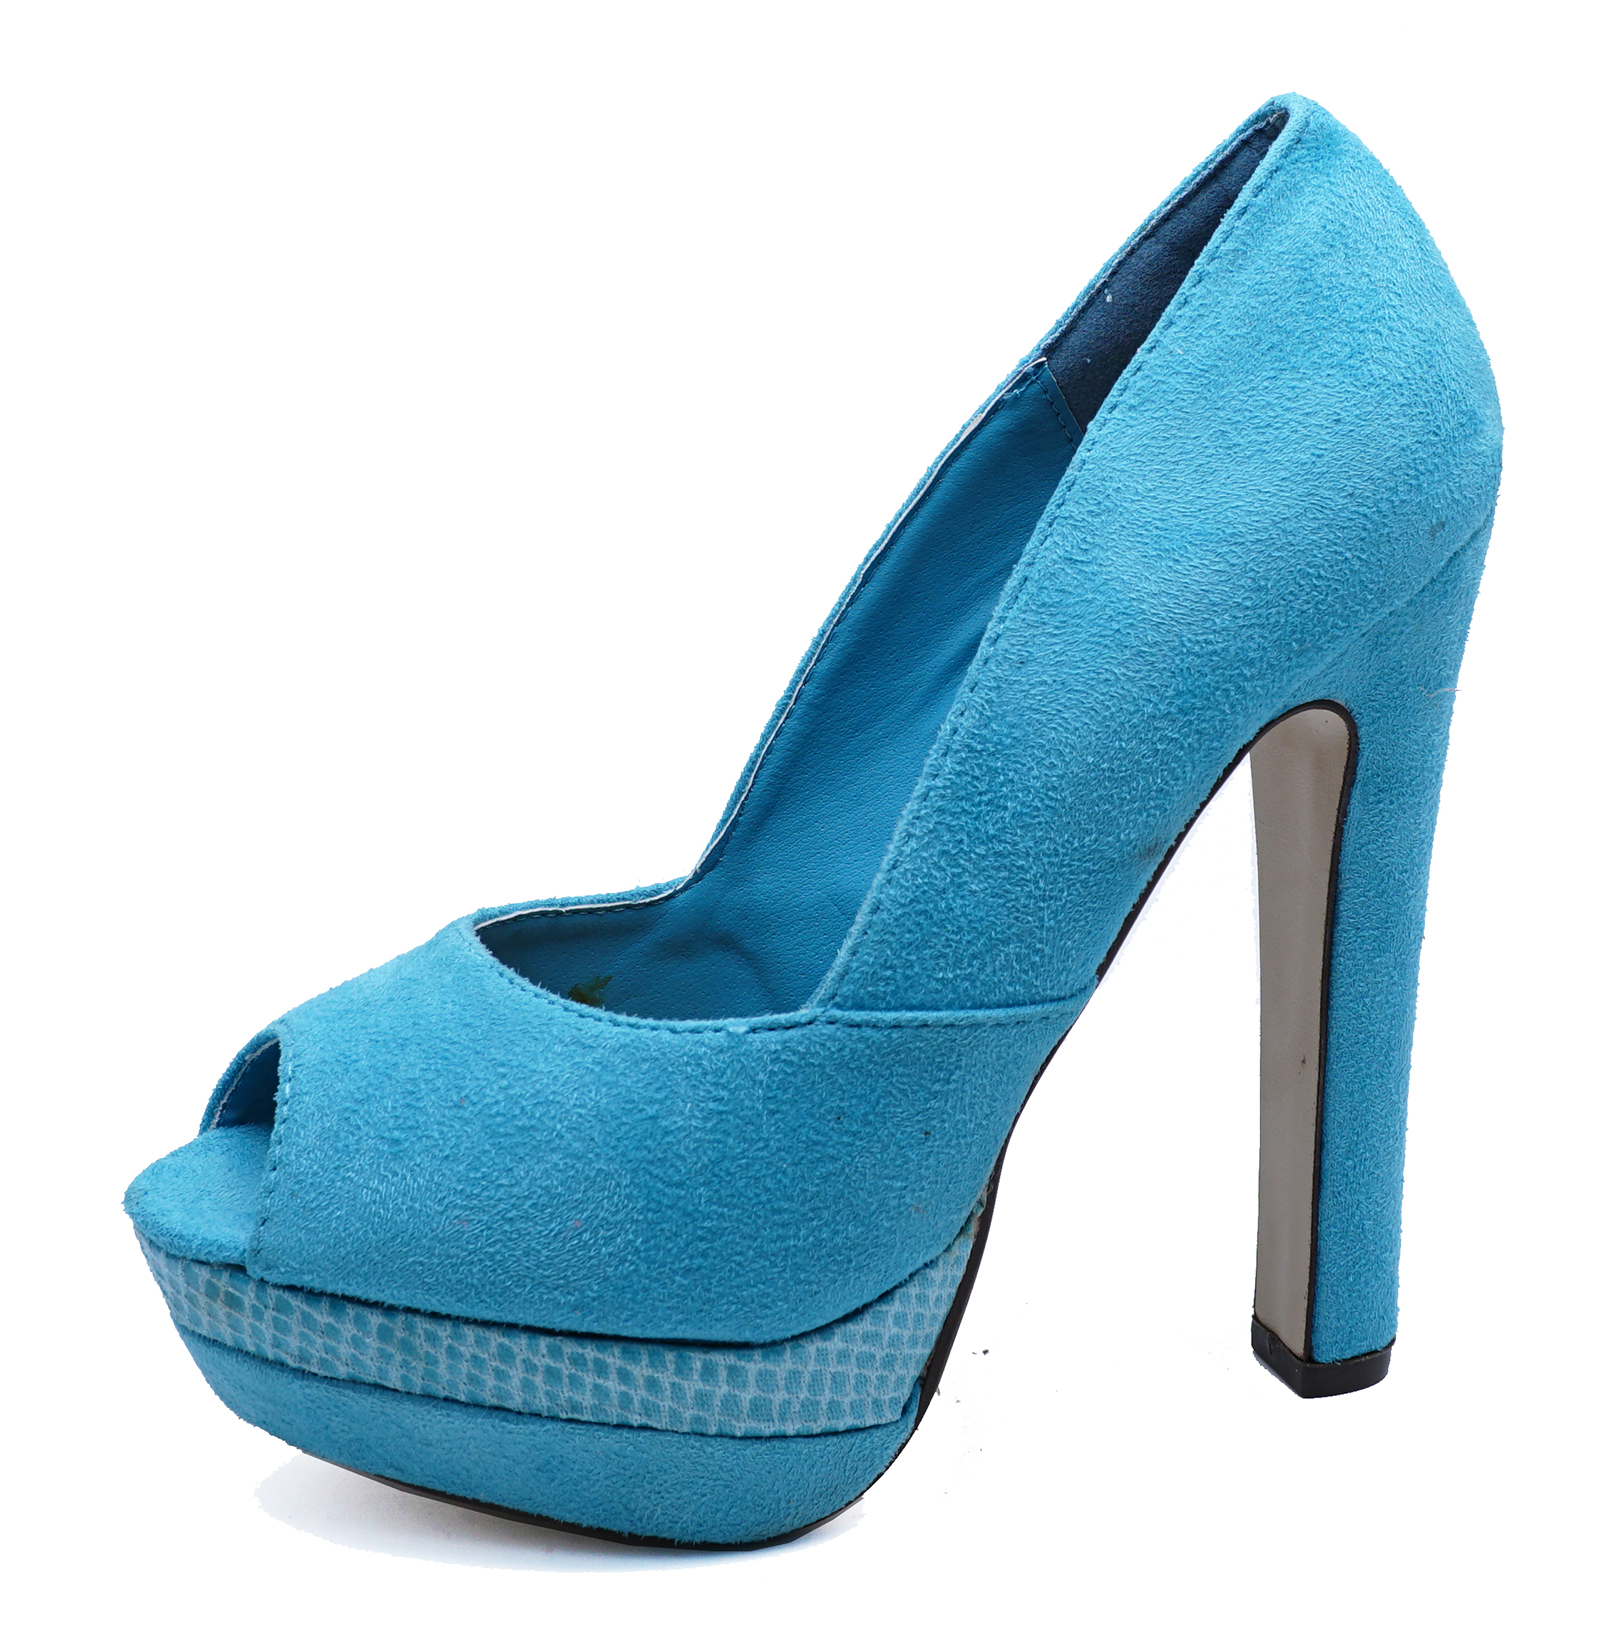 LADIES BLUE SLIP-ON PEEP-TOE COURT PLATFORM SMART HIGH-HEEL PROM SHOES ... Prom Platform High Heels